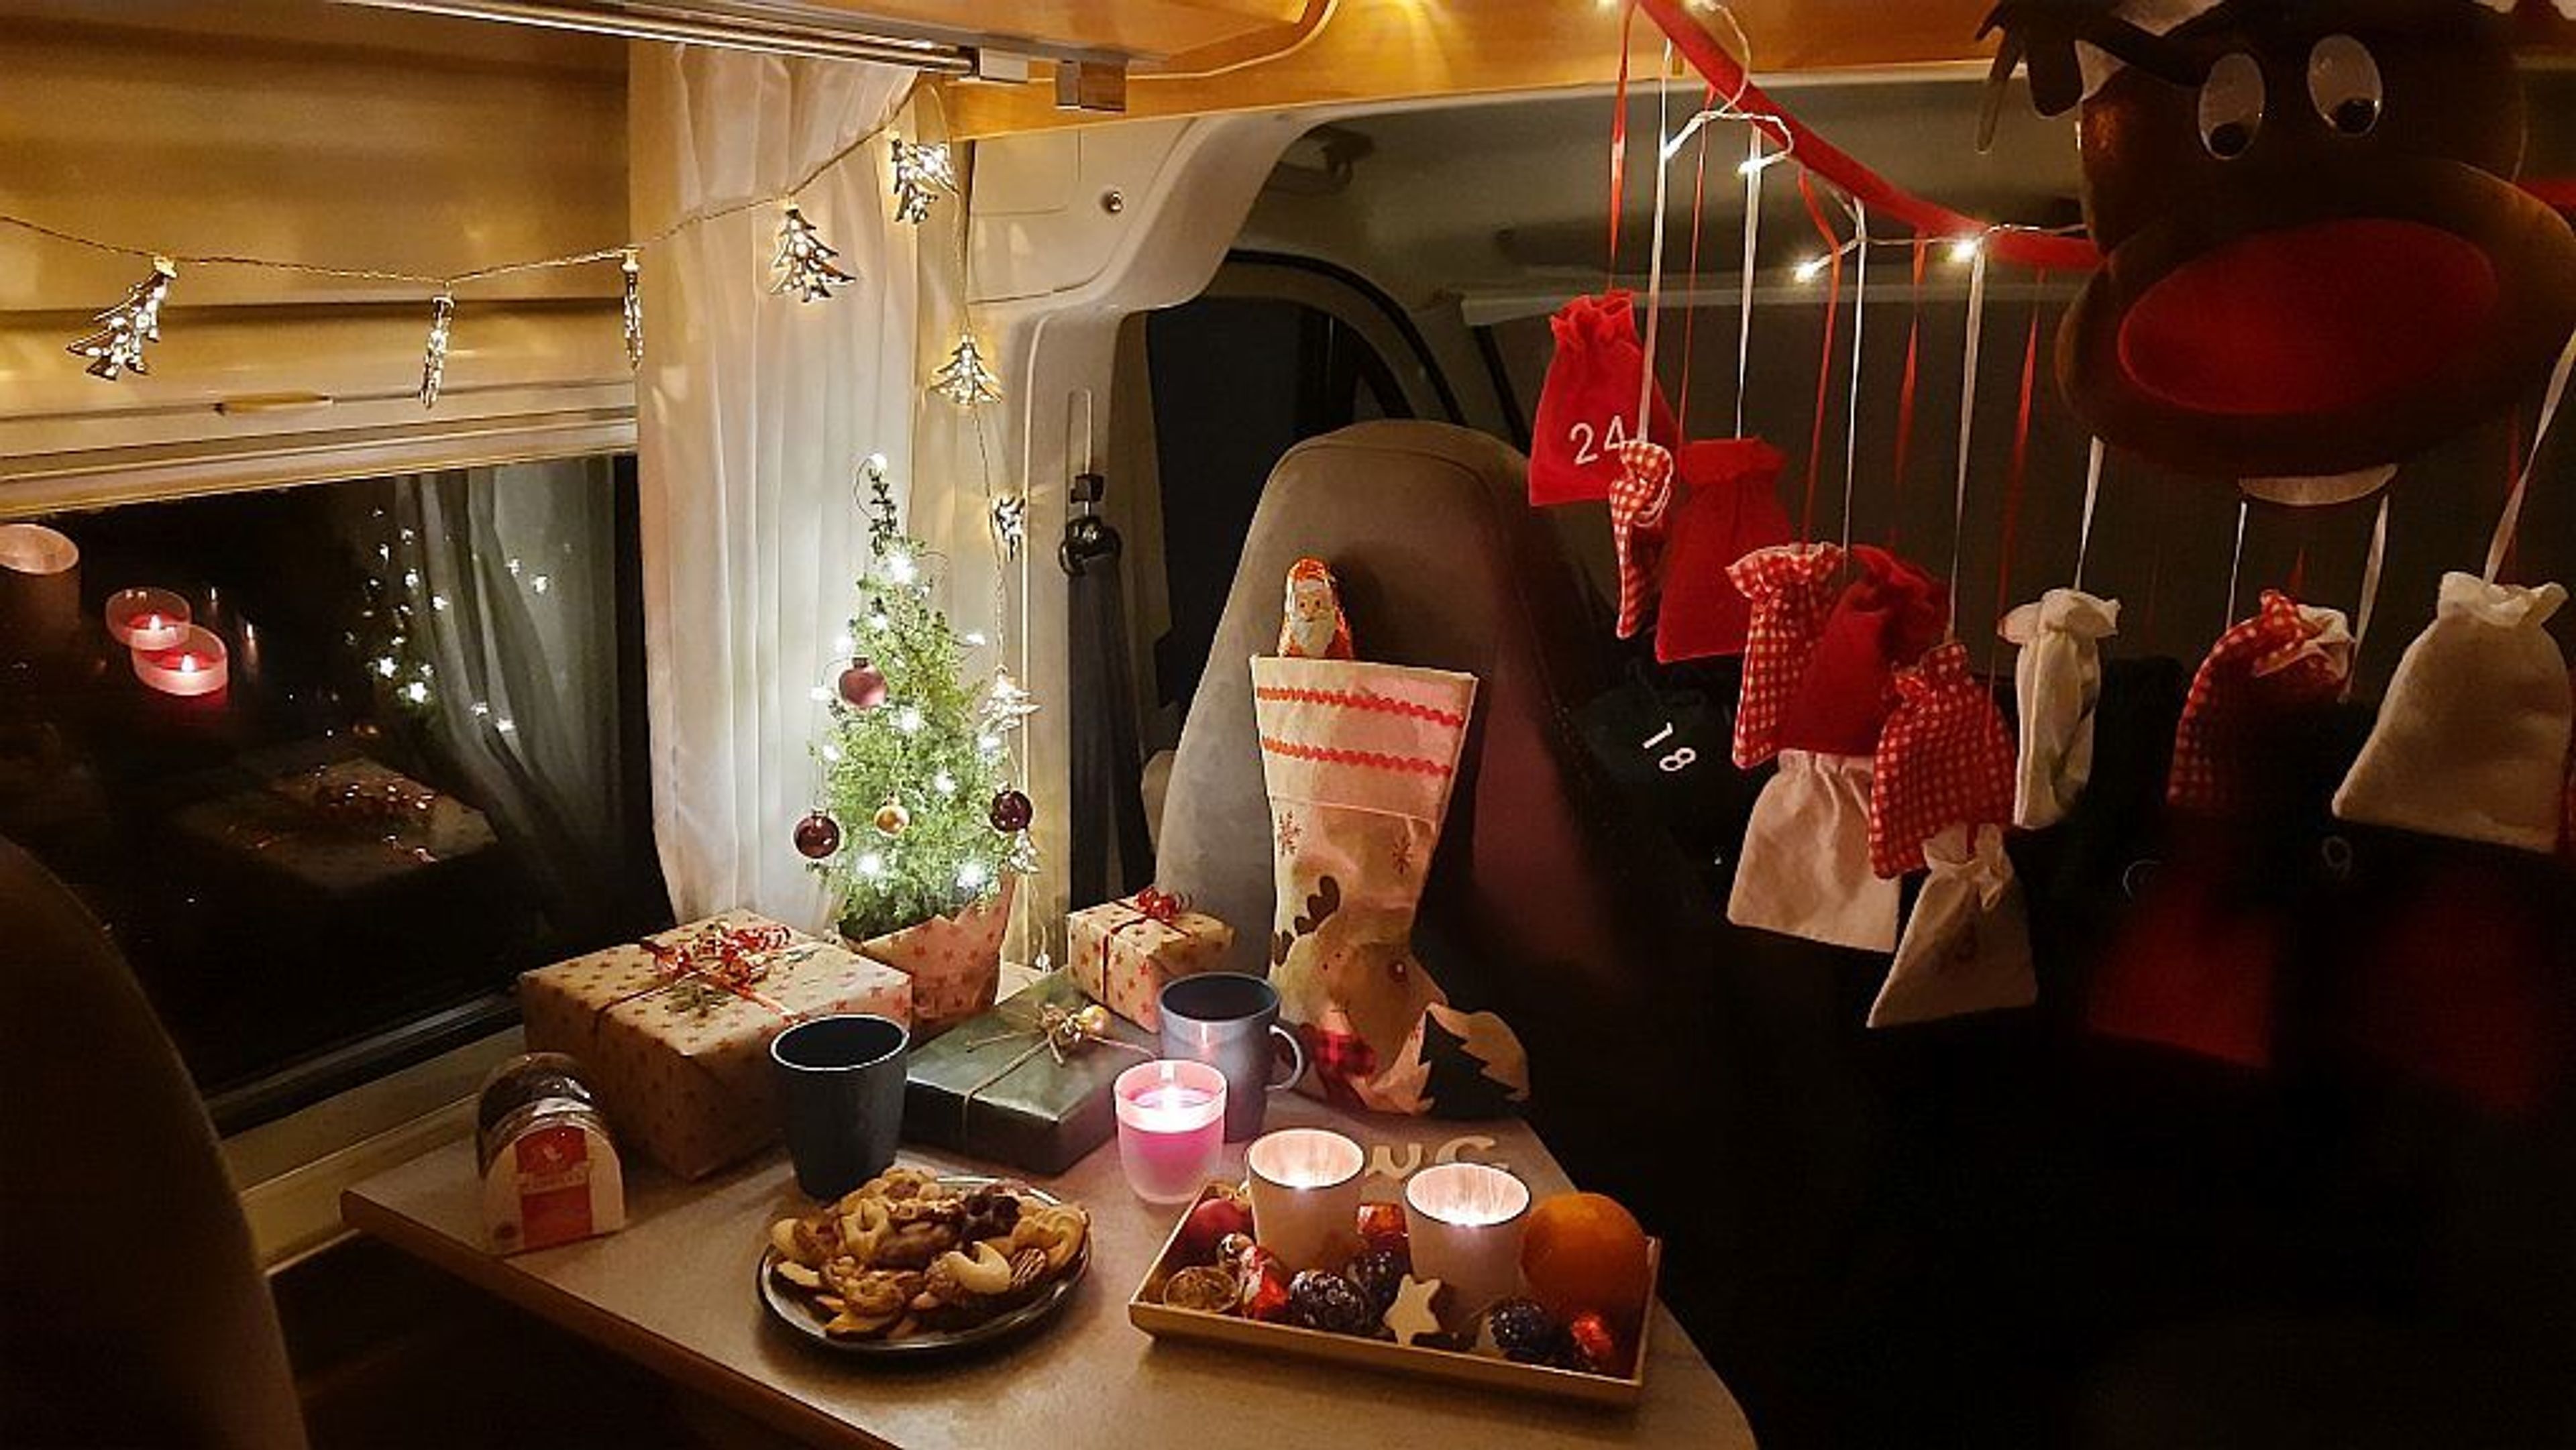 interno di un camper Freeway Camper con decorazioni natalizie